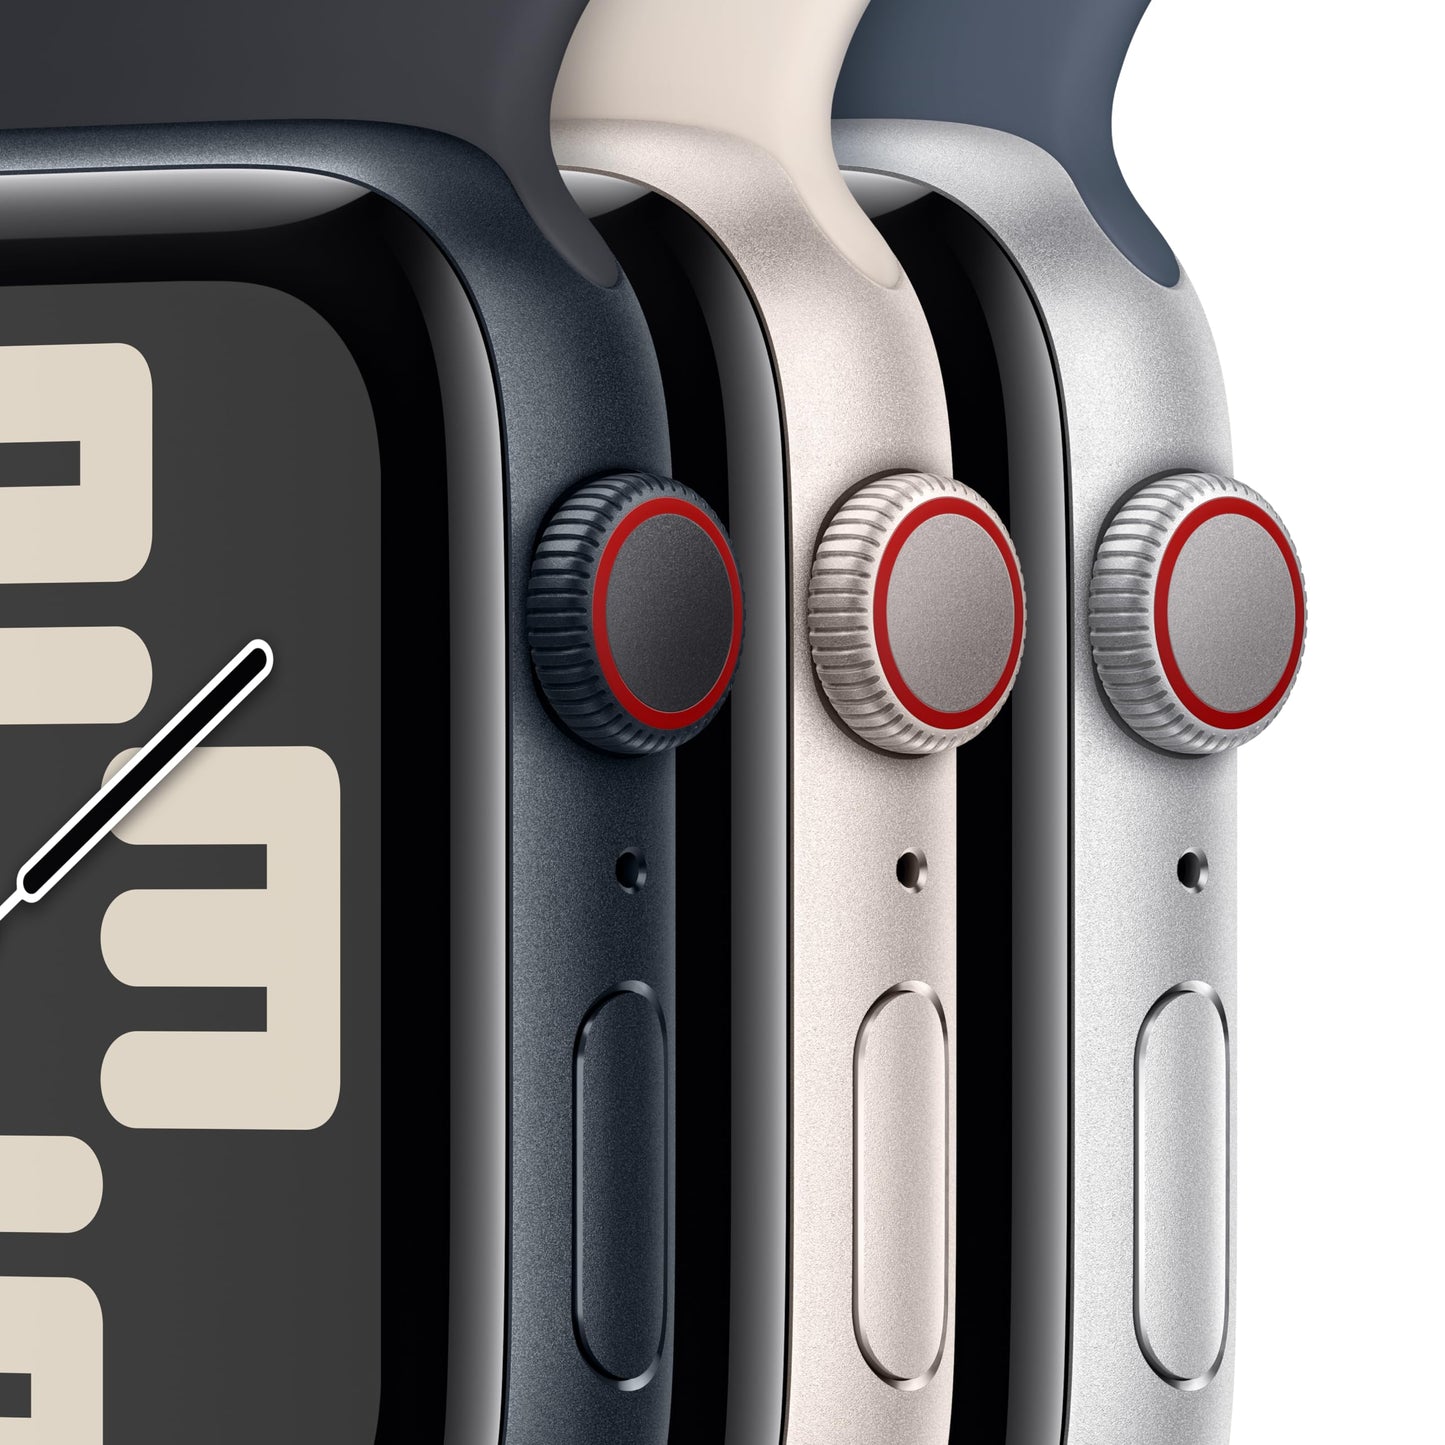 Apple Watch SE GPS + Cellular 44mm Silver Aluminum Case with Storm Blue Sport Band - M/L (2023)